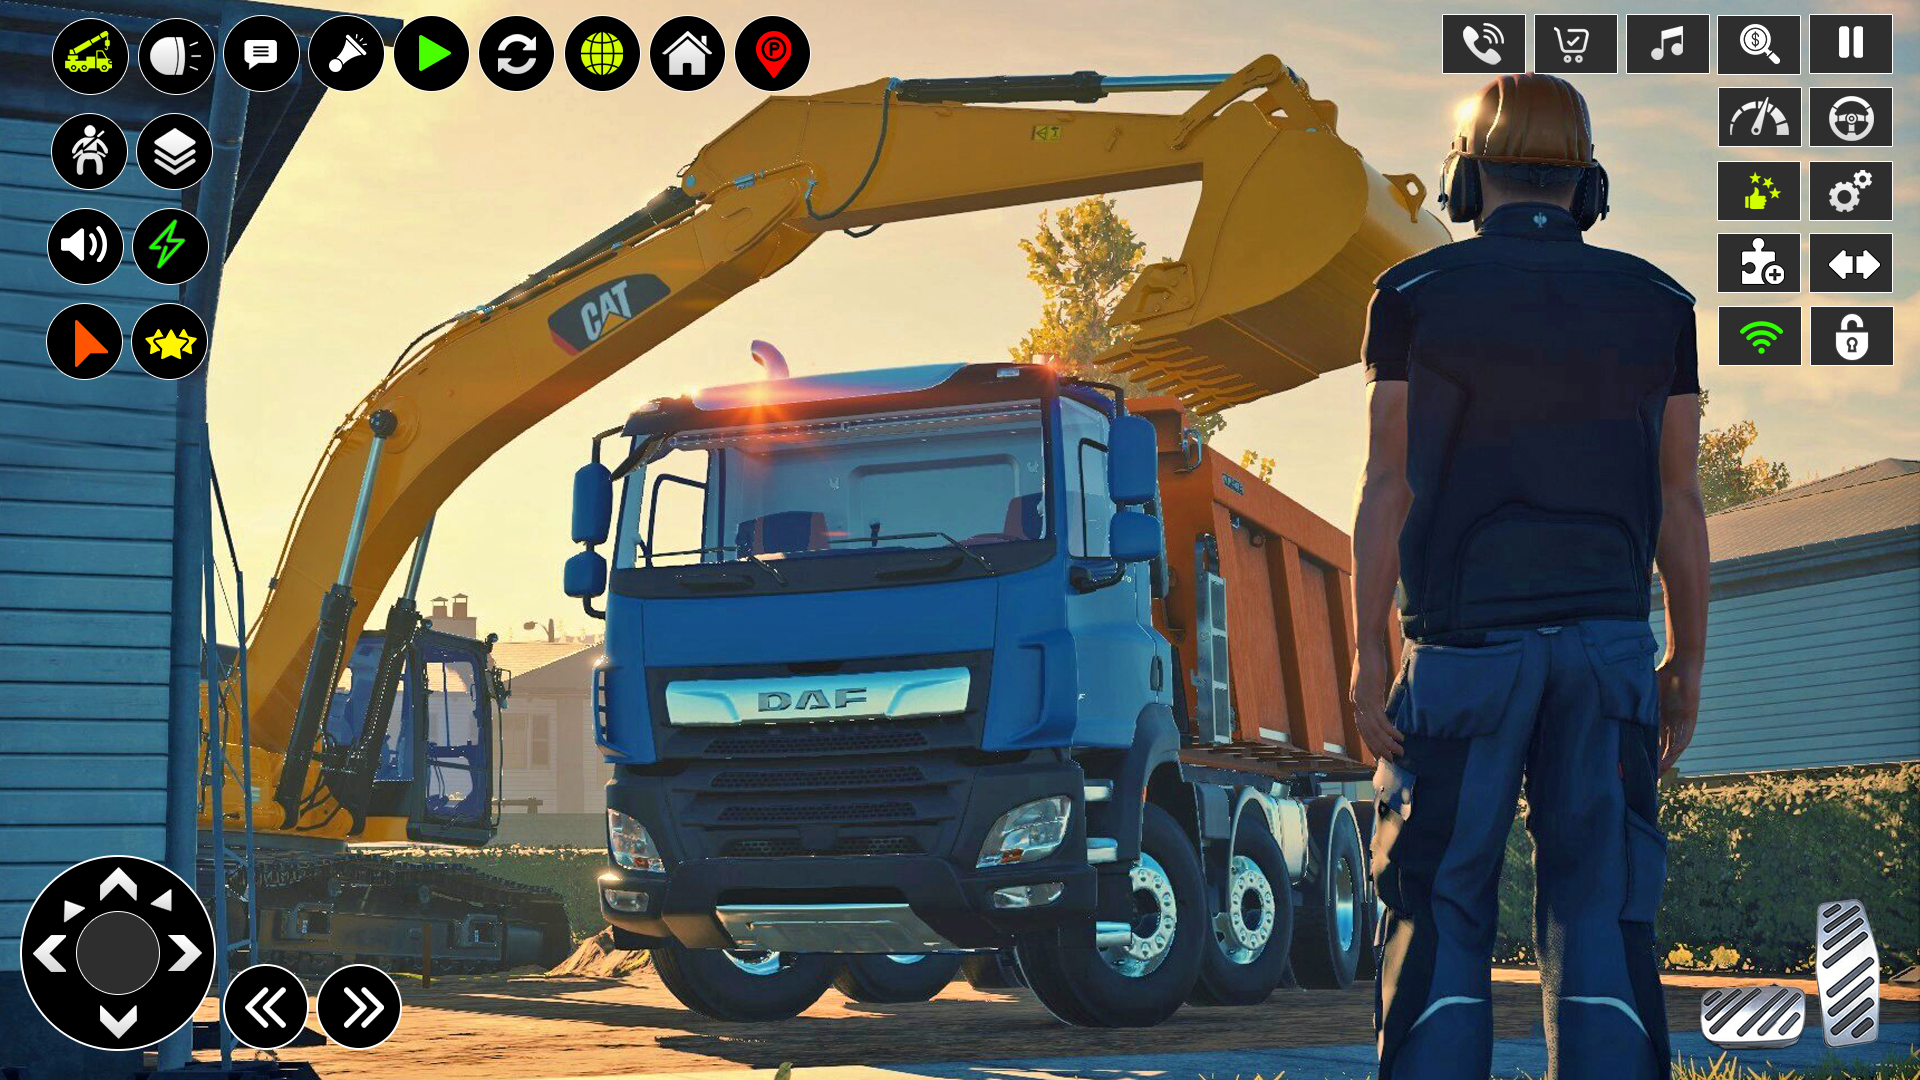 Screenshot of Construction Games JCB Game 3D